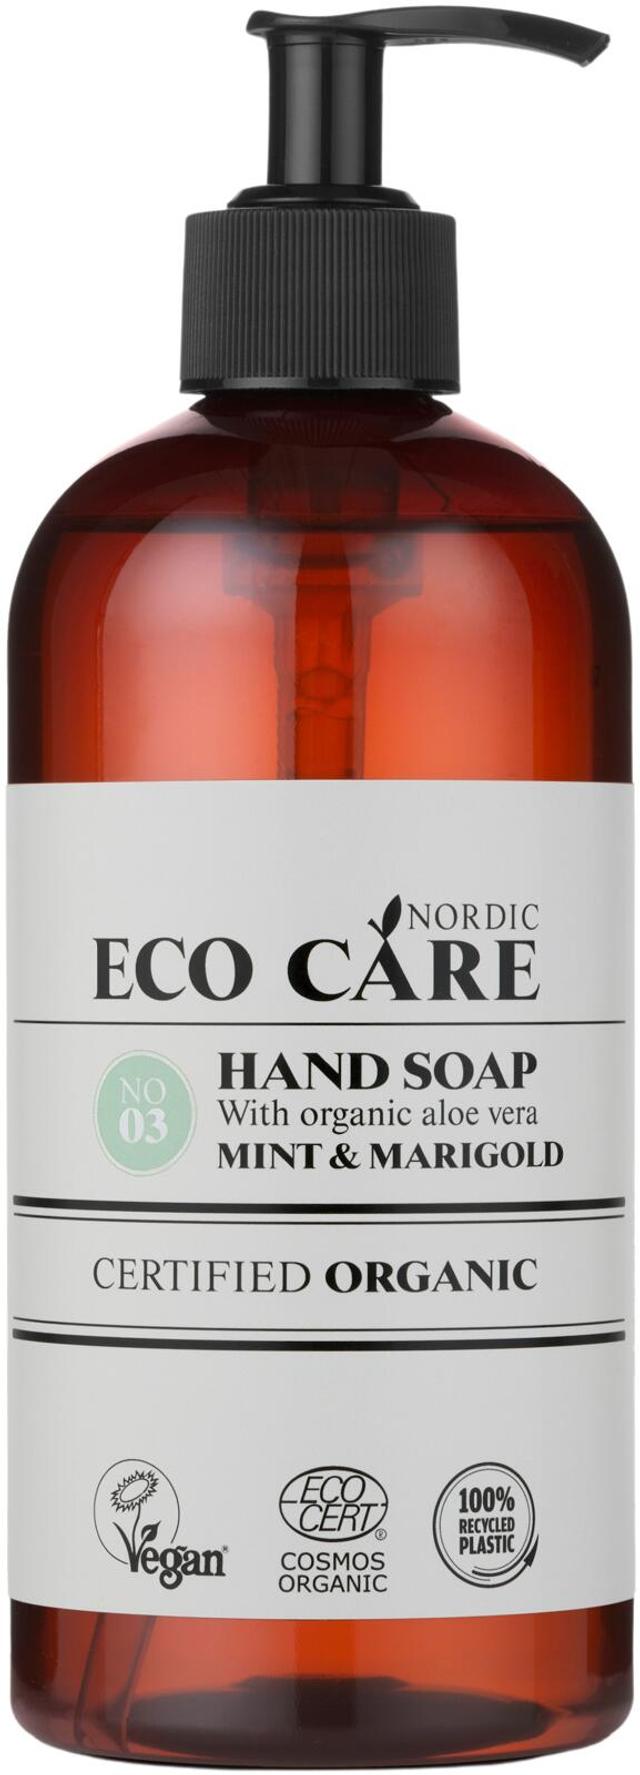 Ecocare cosmosort handsoap mint&marigold